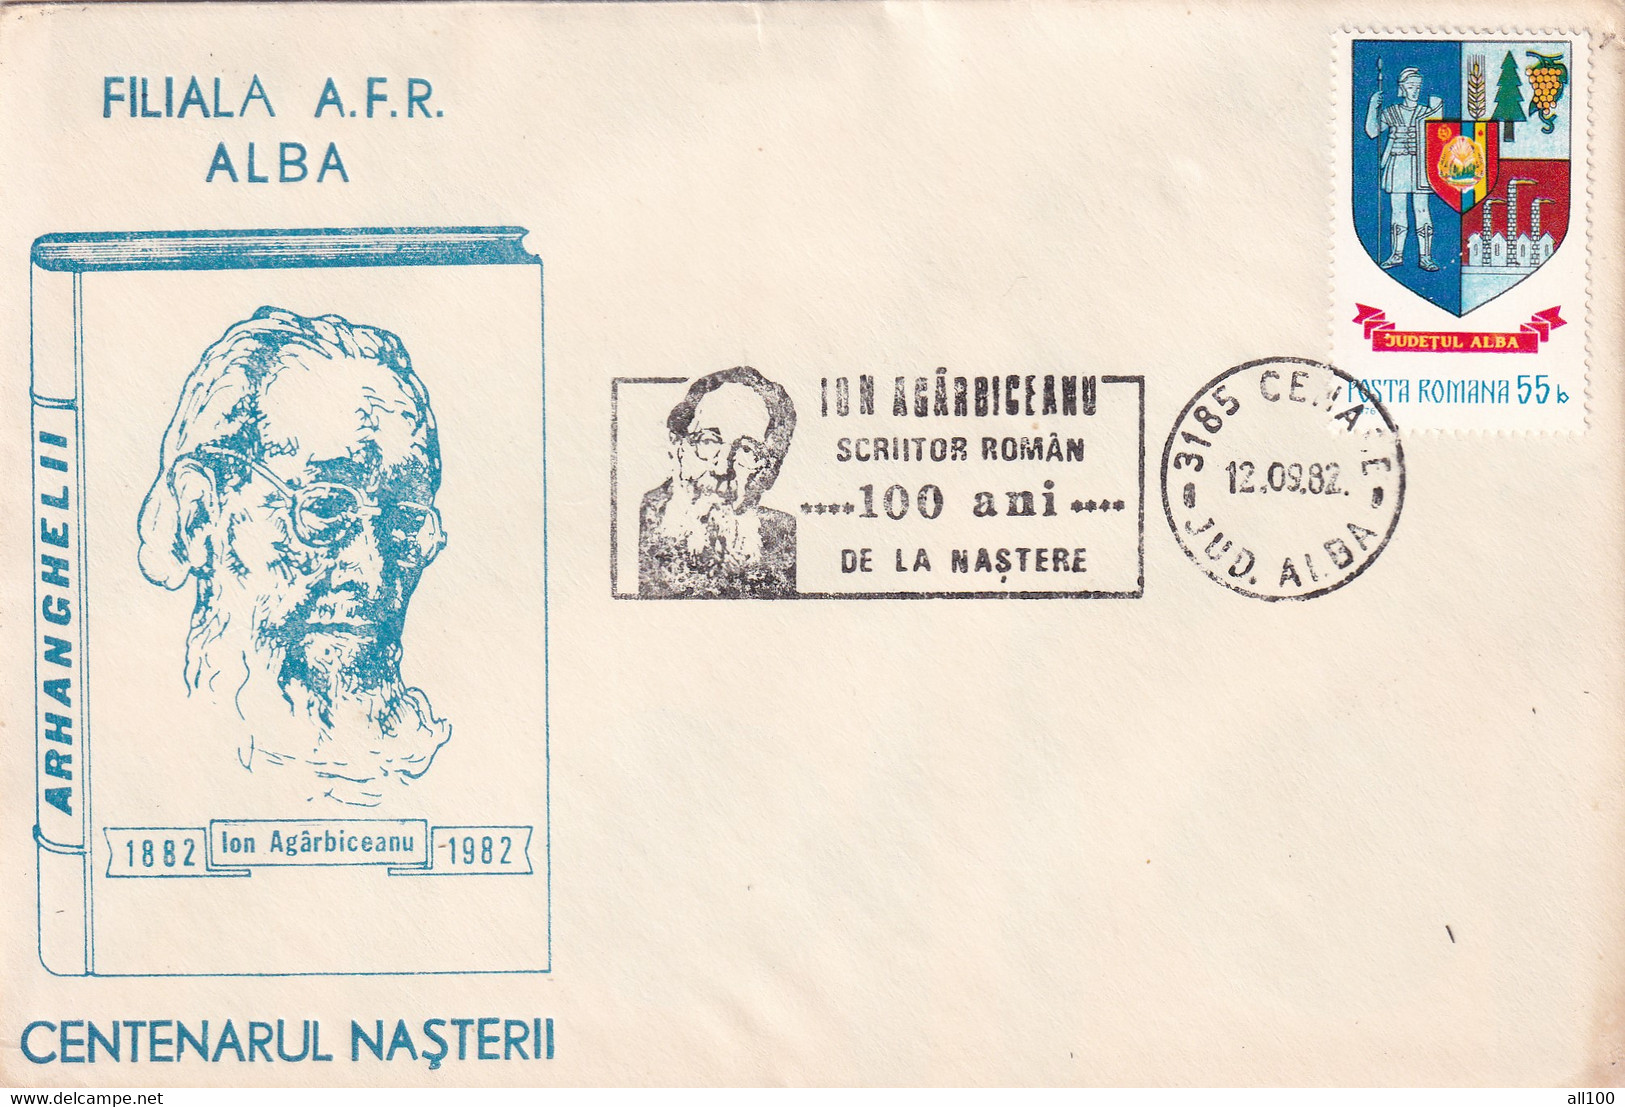 A21967 - Centenarul Nasterii Ion Agarbiceanu Arhangheli Alba Cover Envelope Used 1982 RS Romania Stamp Judetul Alba - Covers & Documents